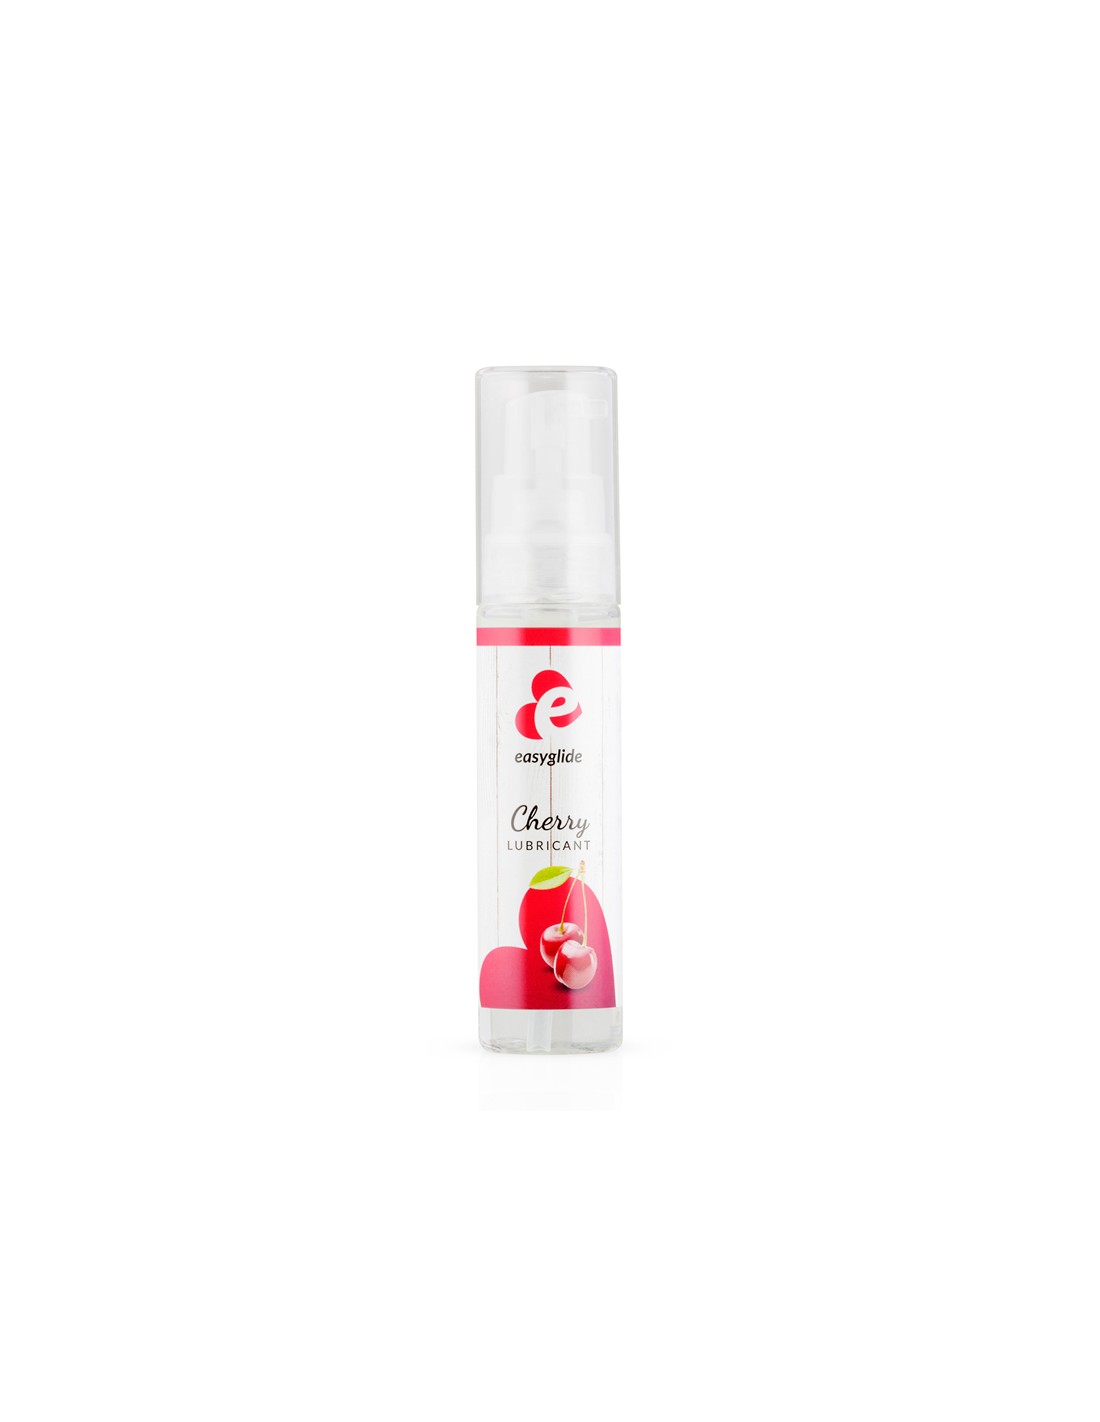 EasyGlide Cherry Waterbased Lubricant - 30ml